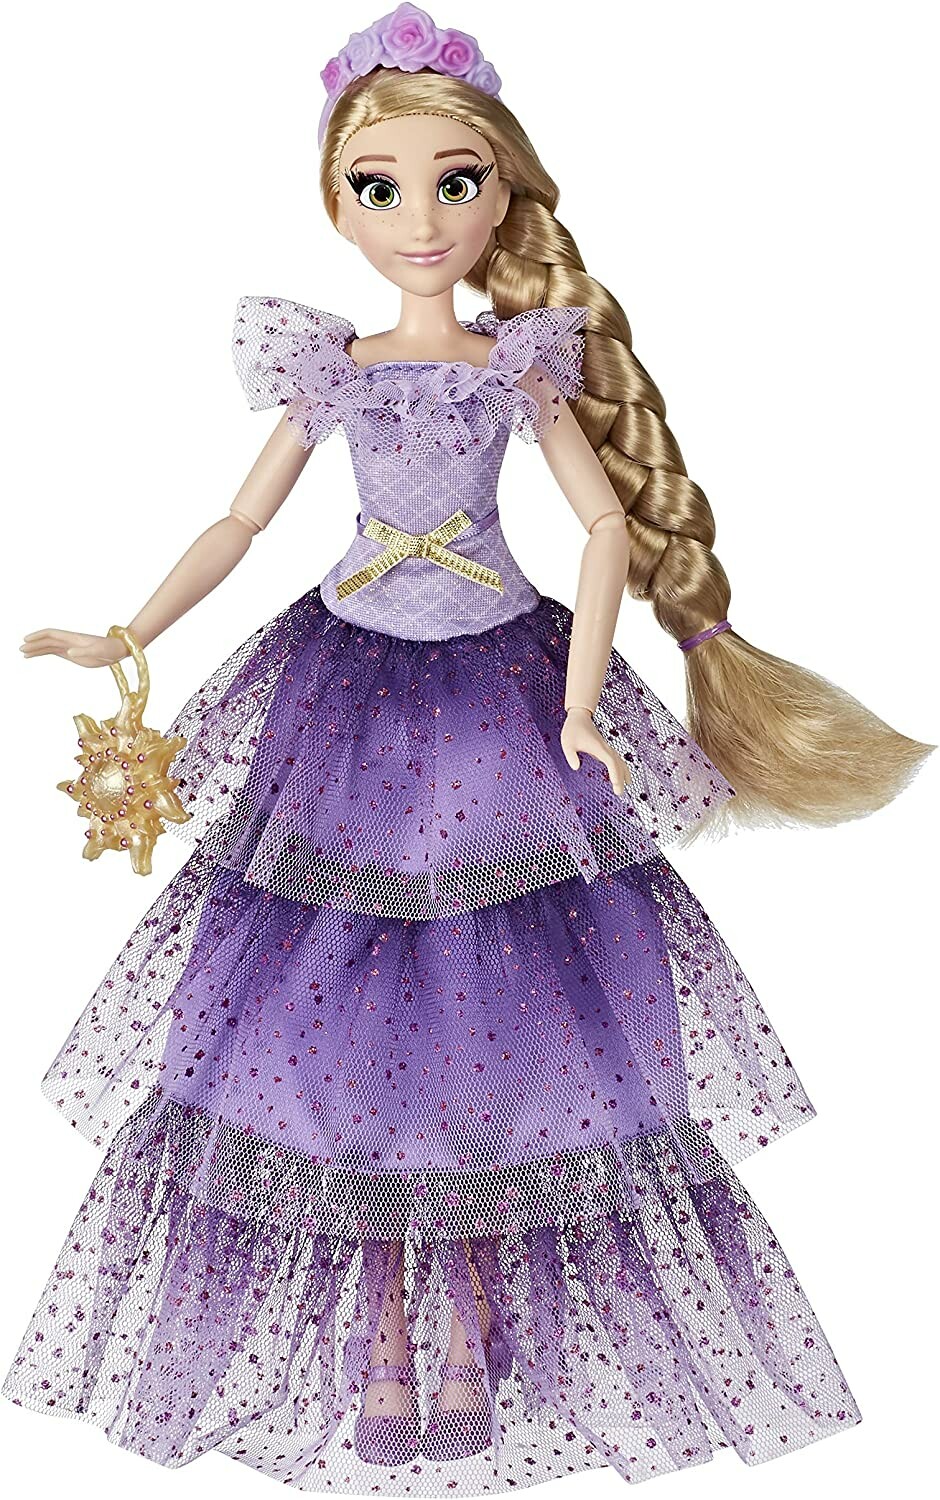 Poupée barbie Disney princesse - Disney